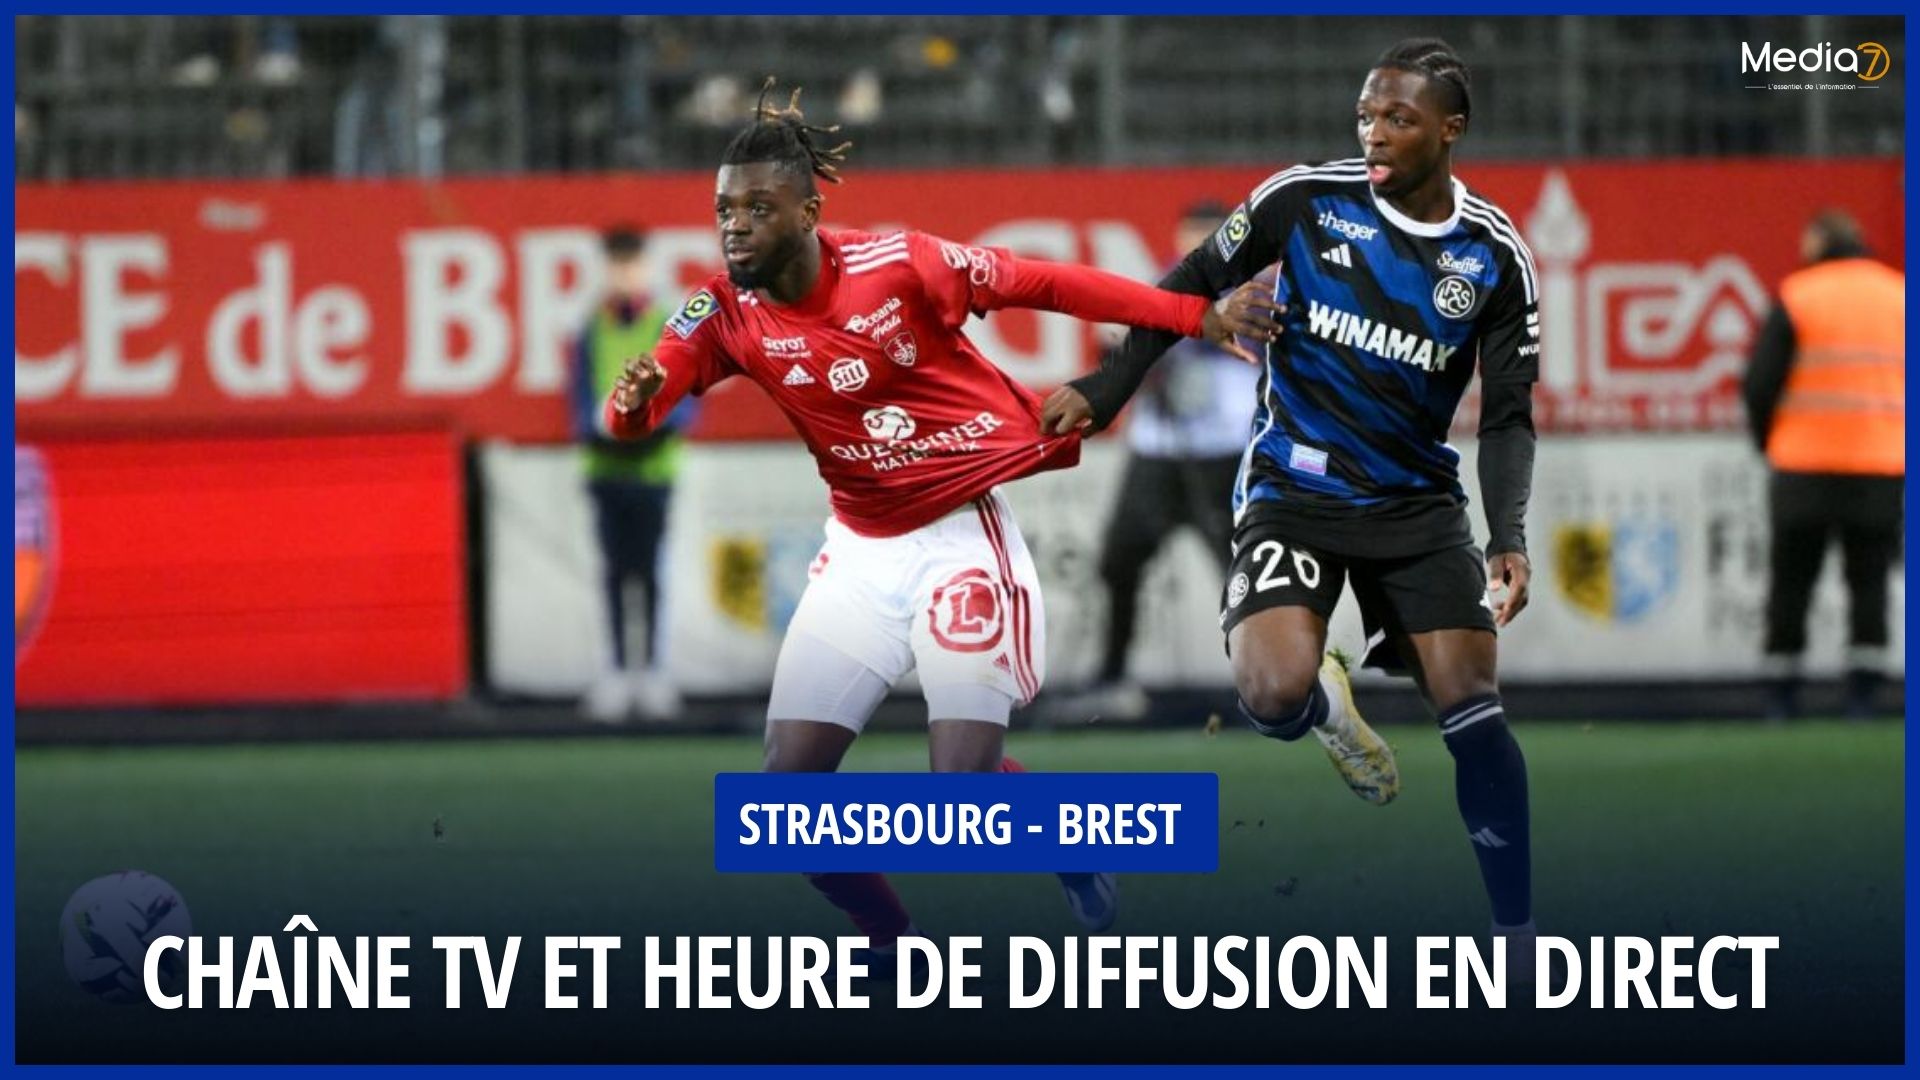 Strasbourg - Brest match live: TV channel and broadcast time - Media7